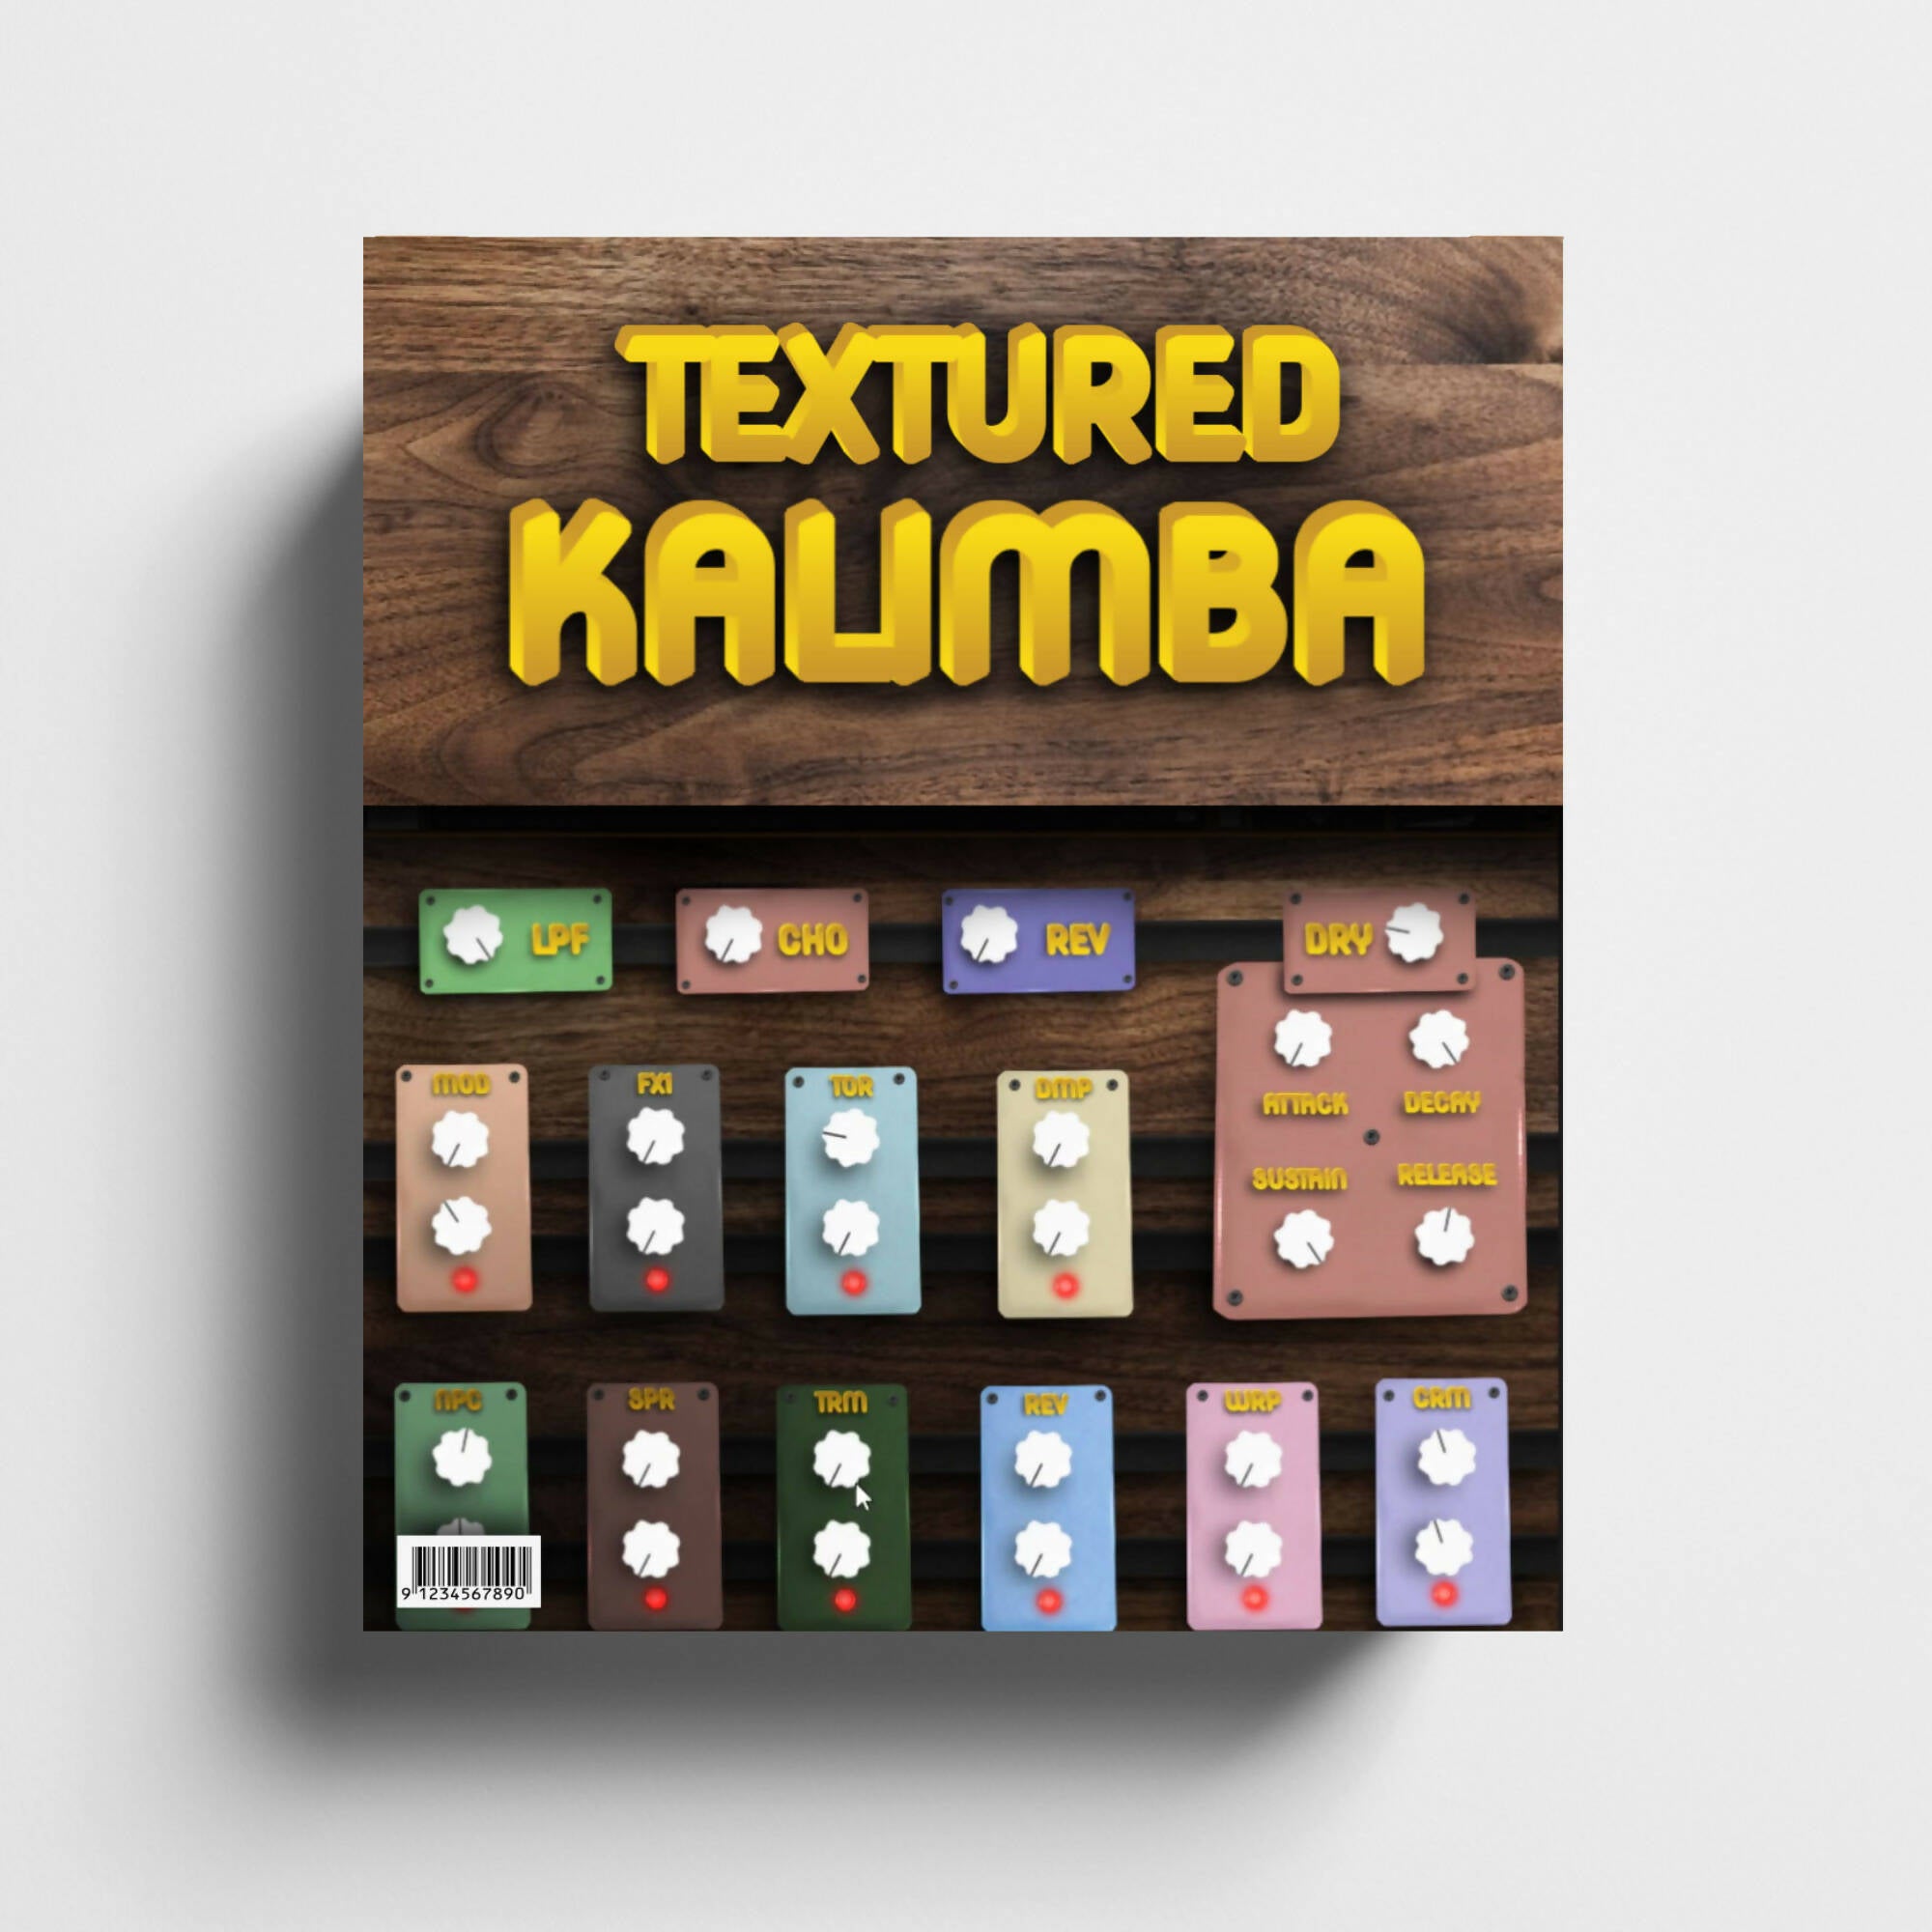 Textured Kalimba: Kontakt Bank